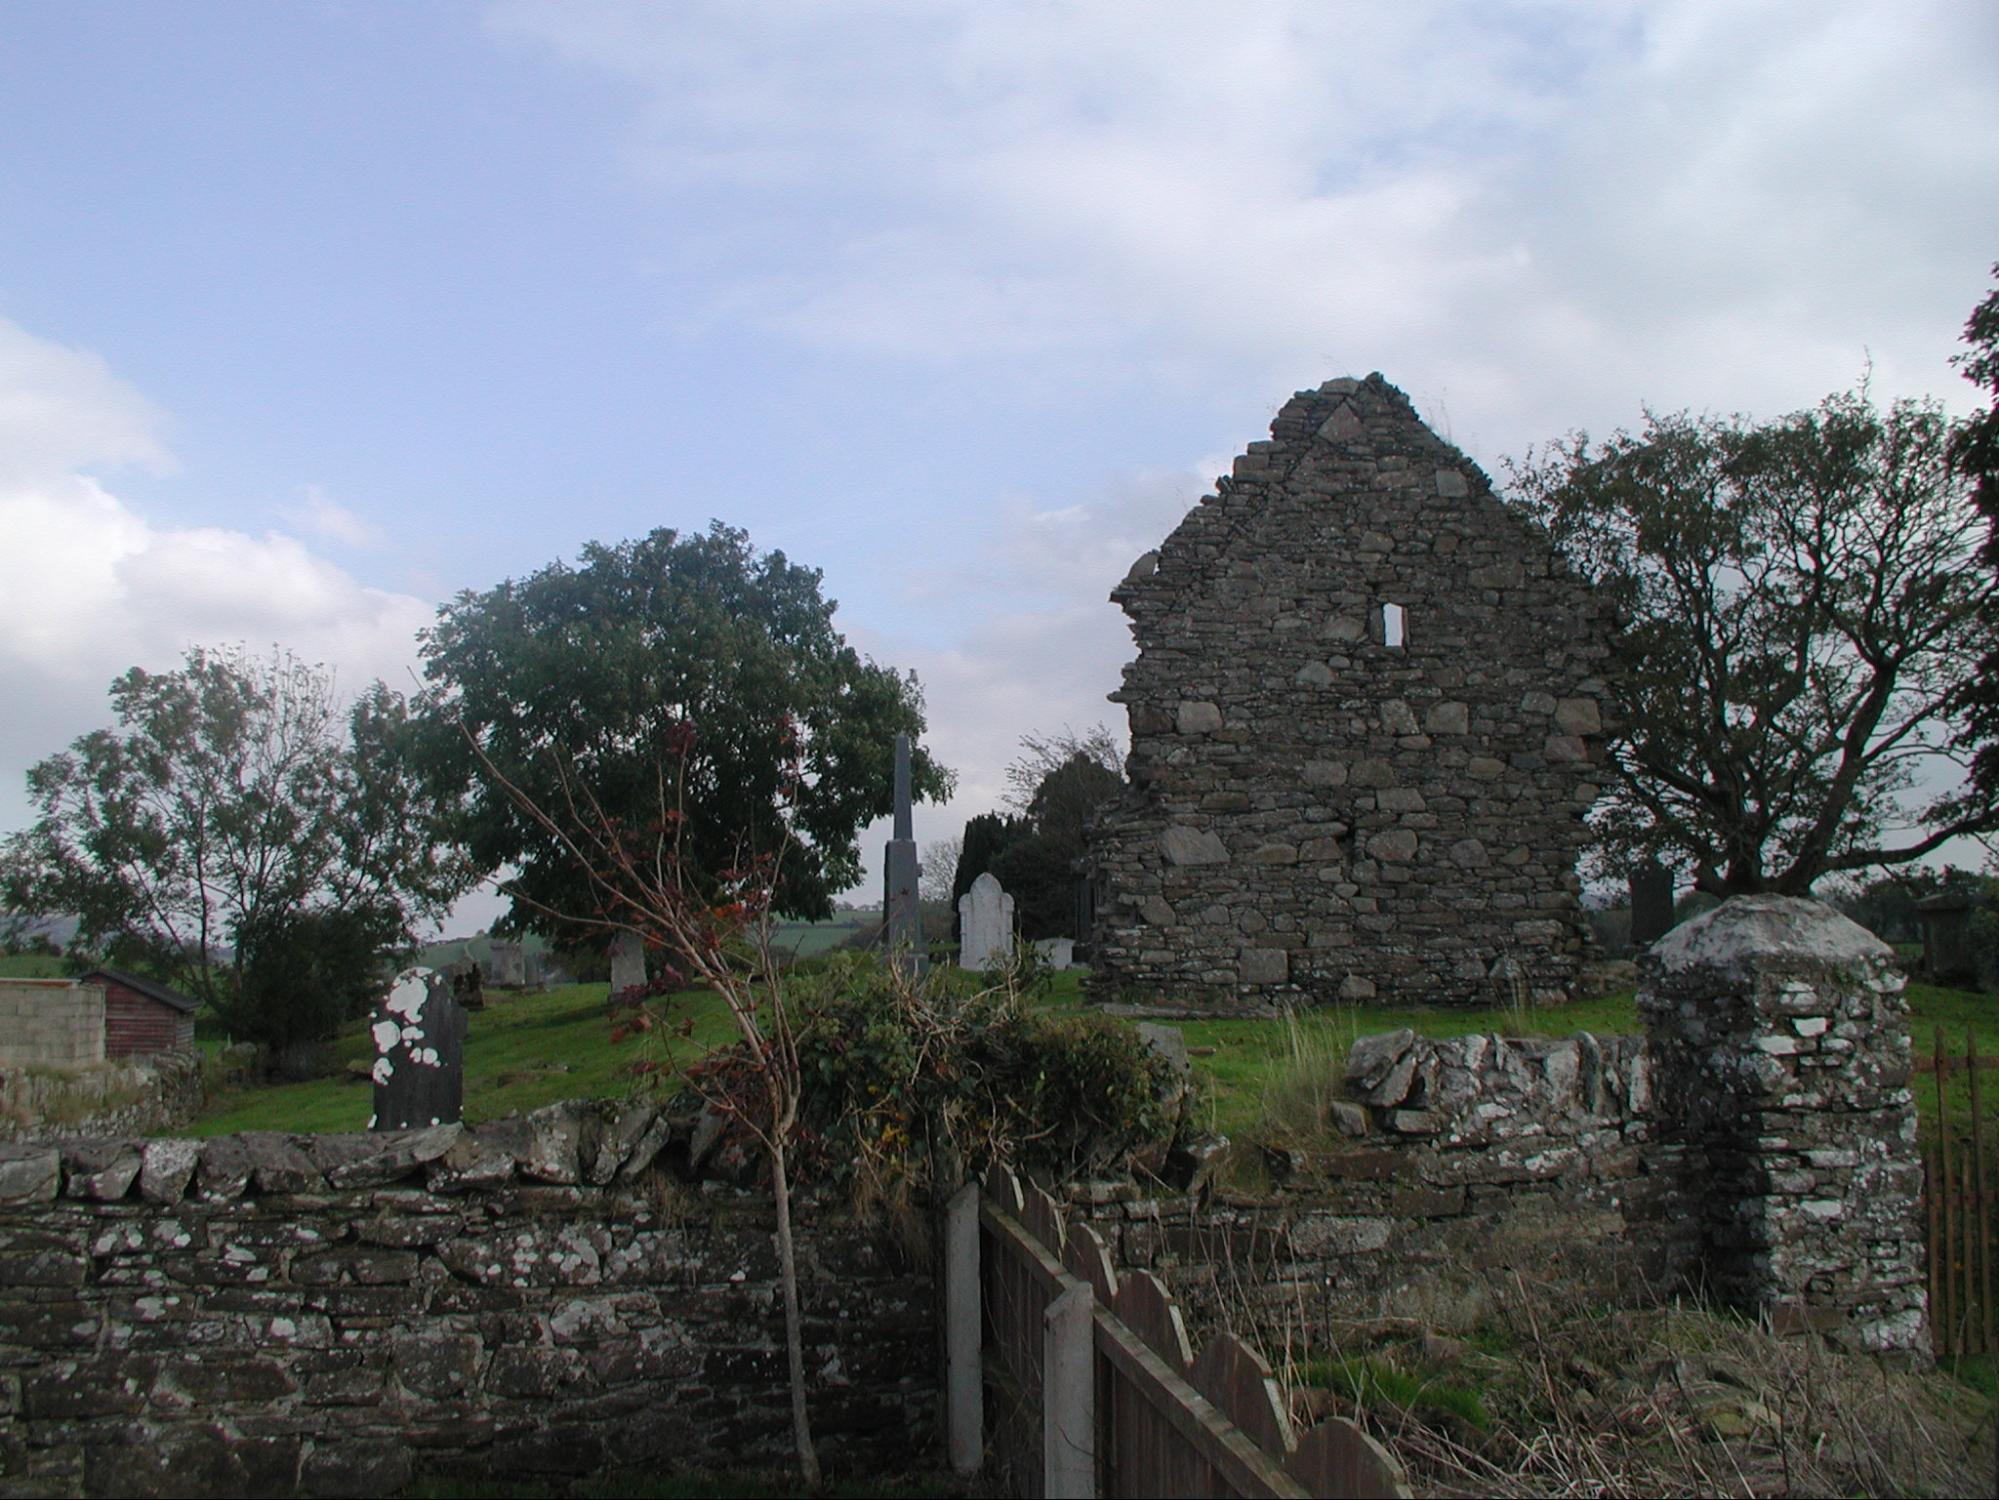 Donagheady Old Church and Graveyard